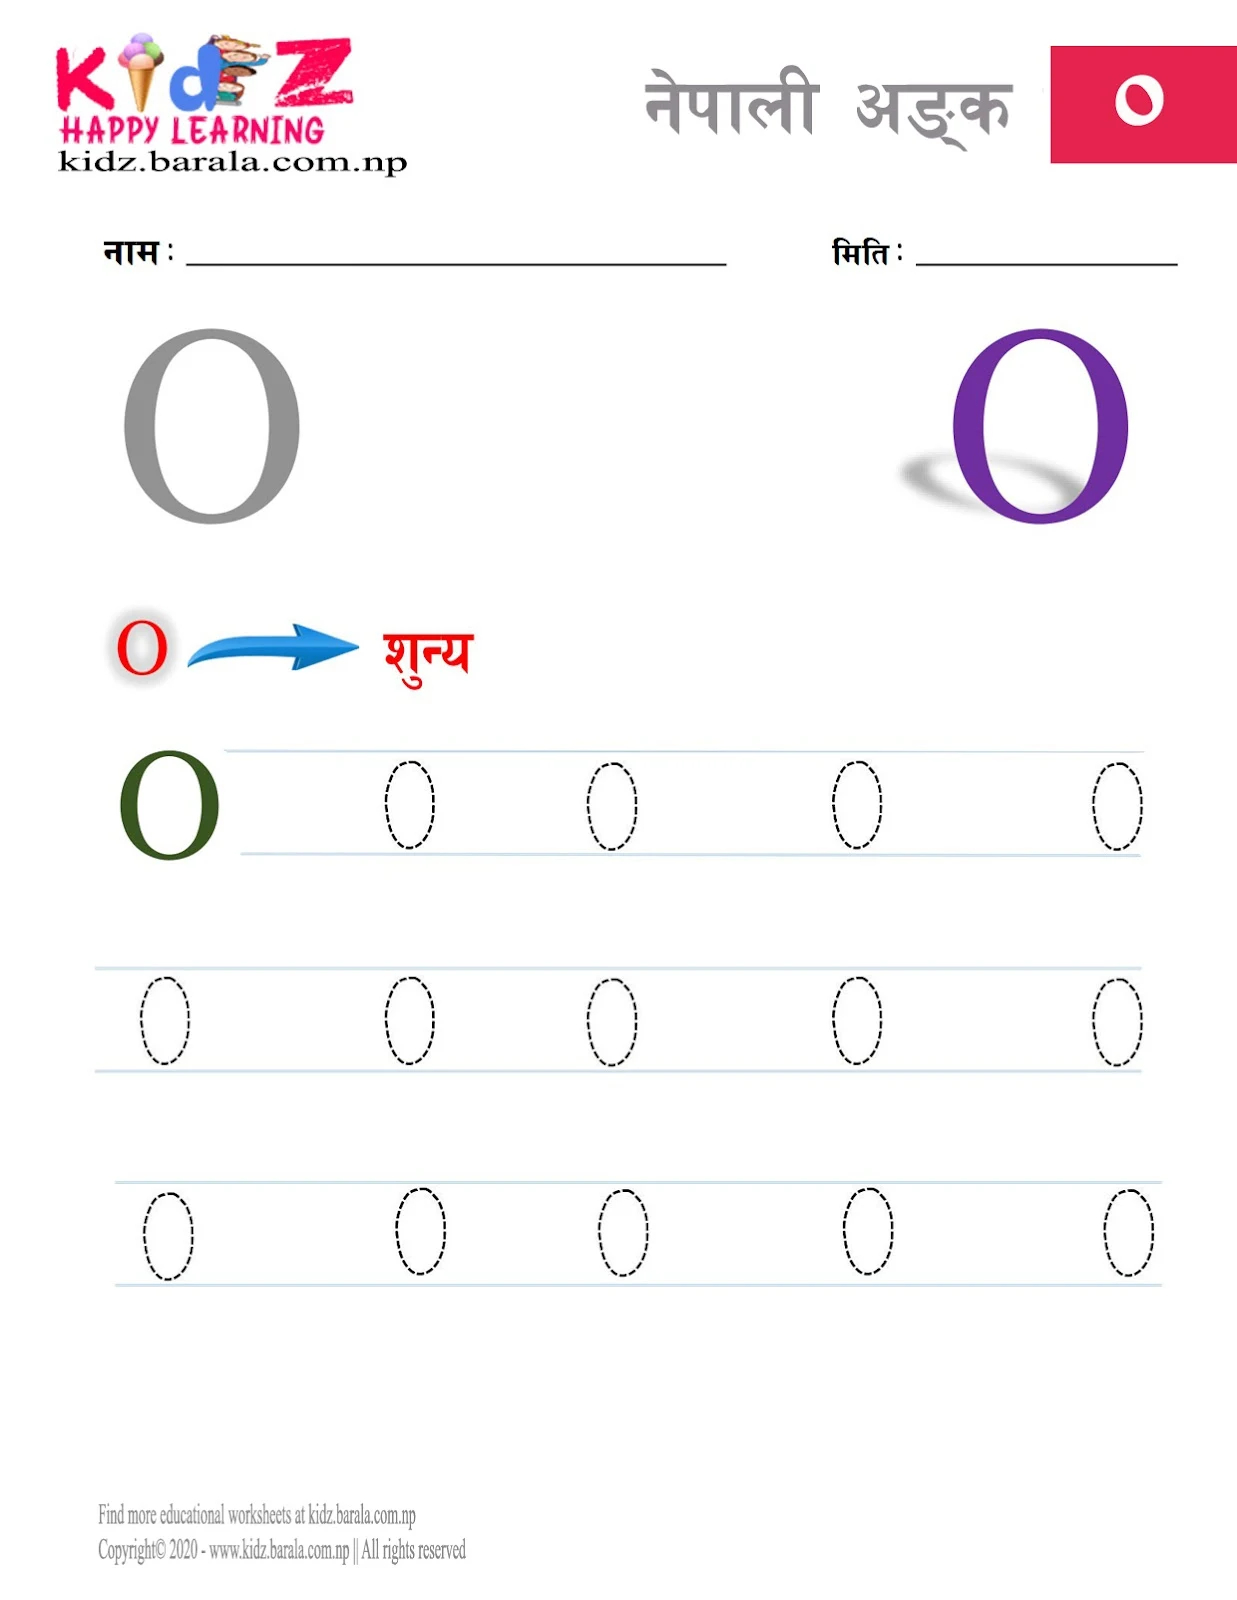 Nepali number शुन्य zero ० tracing worksheet free download .pdf